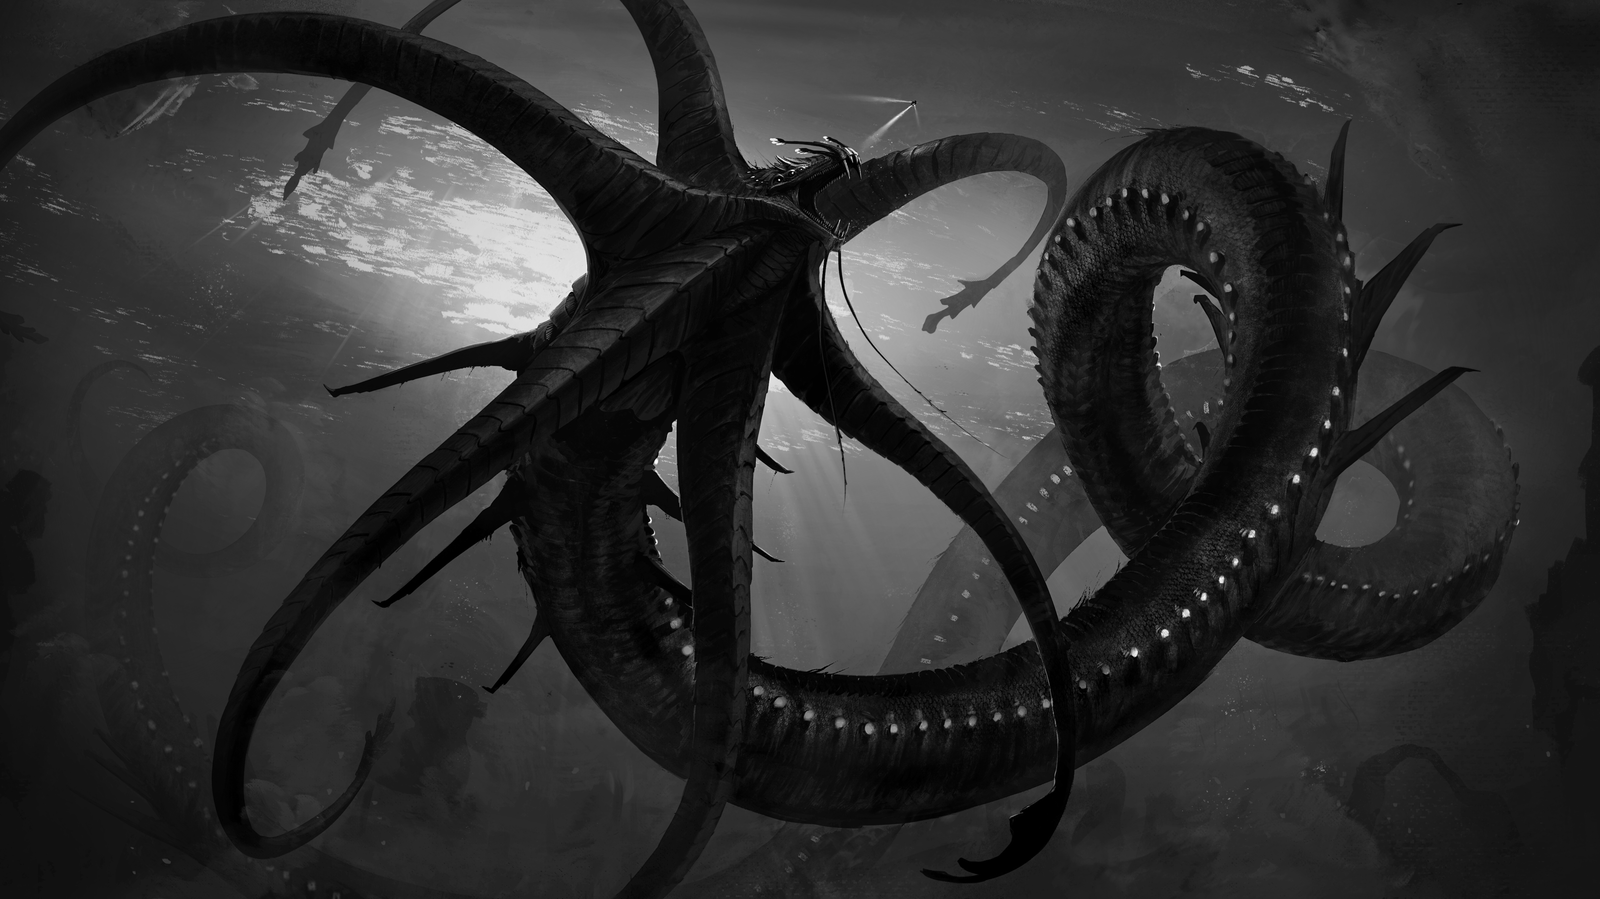 Gargantuan Leviathan - Deviantart, Subnautica, Ocean, Leviathan, Black and white, Art, Drawing, Digital drawing